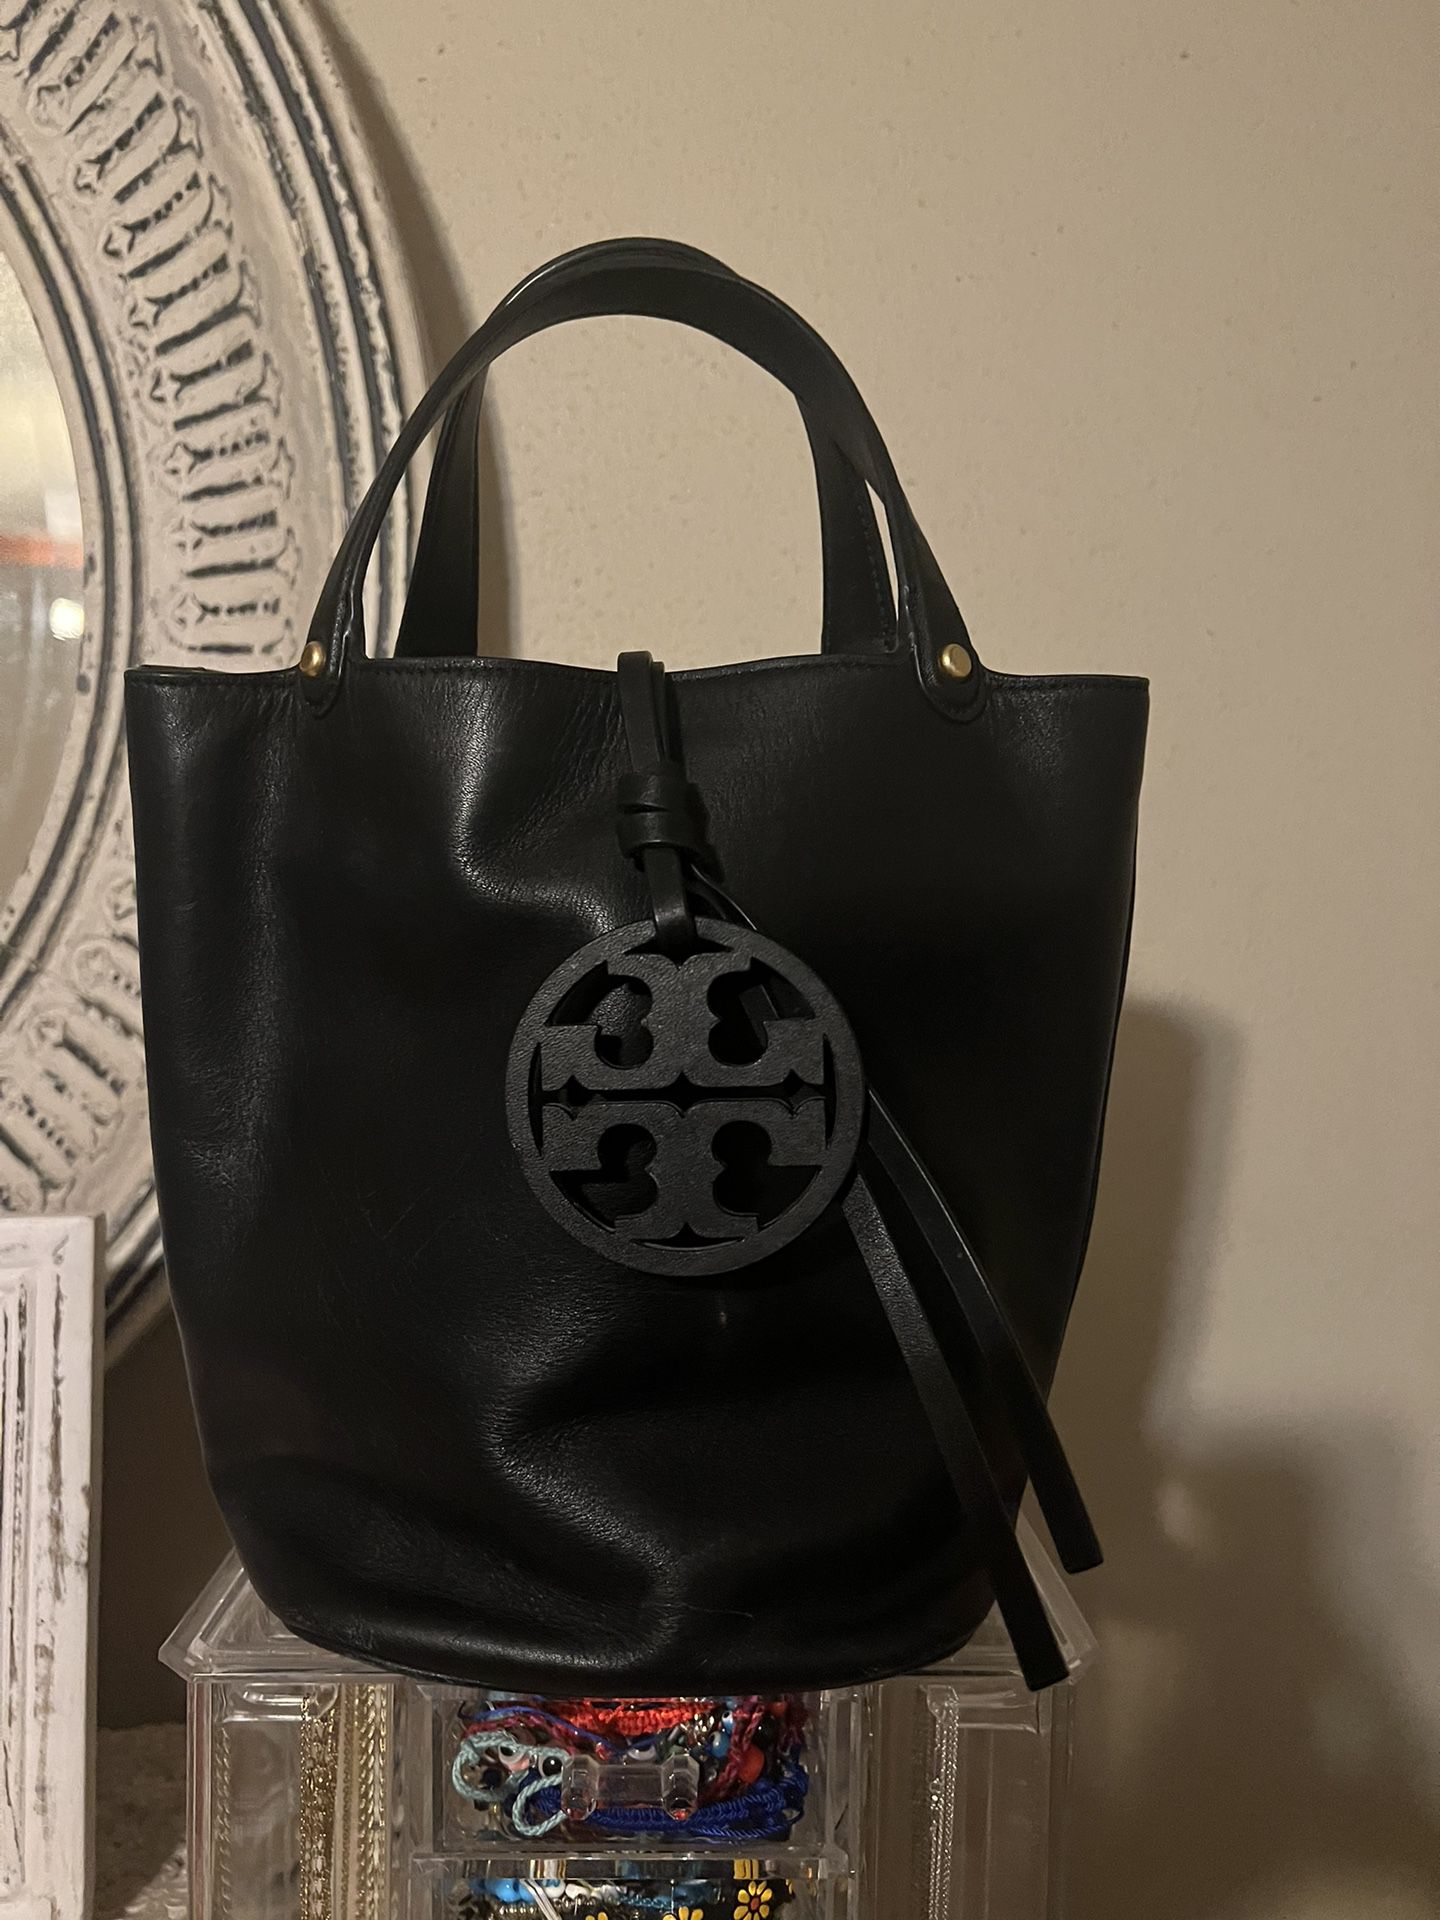 Authentic Tory Burch Miller Bucket Bag for Sale in San Antonio, TX - OfferUp